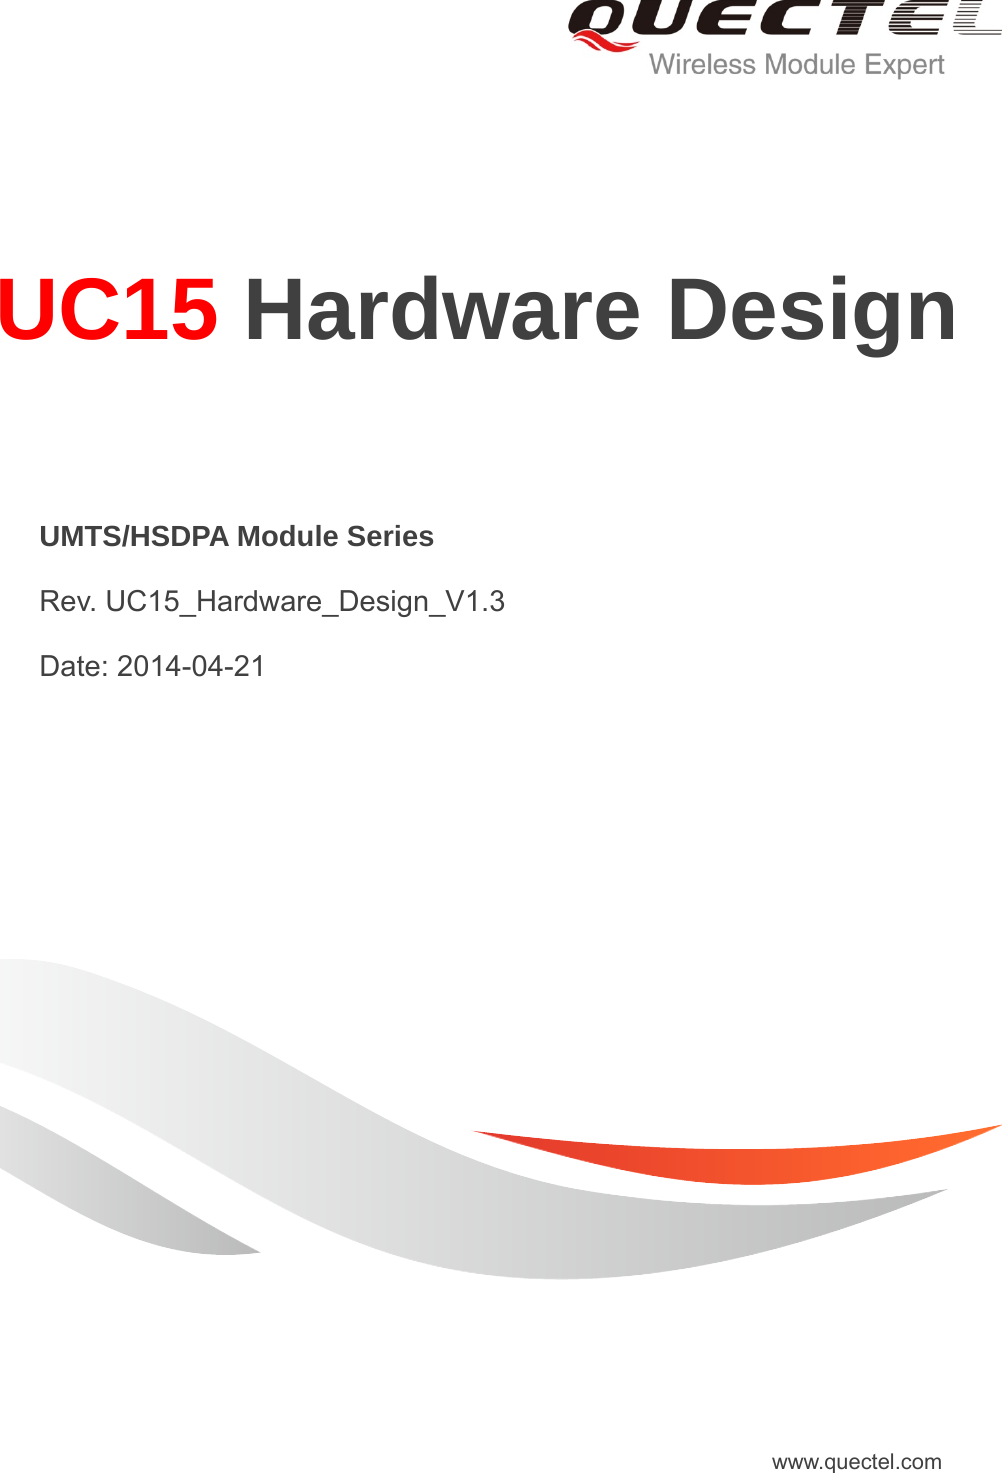     UC15 Hardware Design   UMTS/HSDPA Module Series  Rev. UC15_Hardware_Design_V1.3  Date: 2014-04-21 www.quectel.com